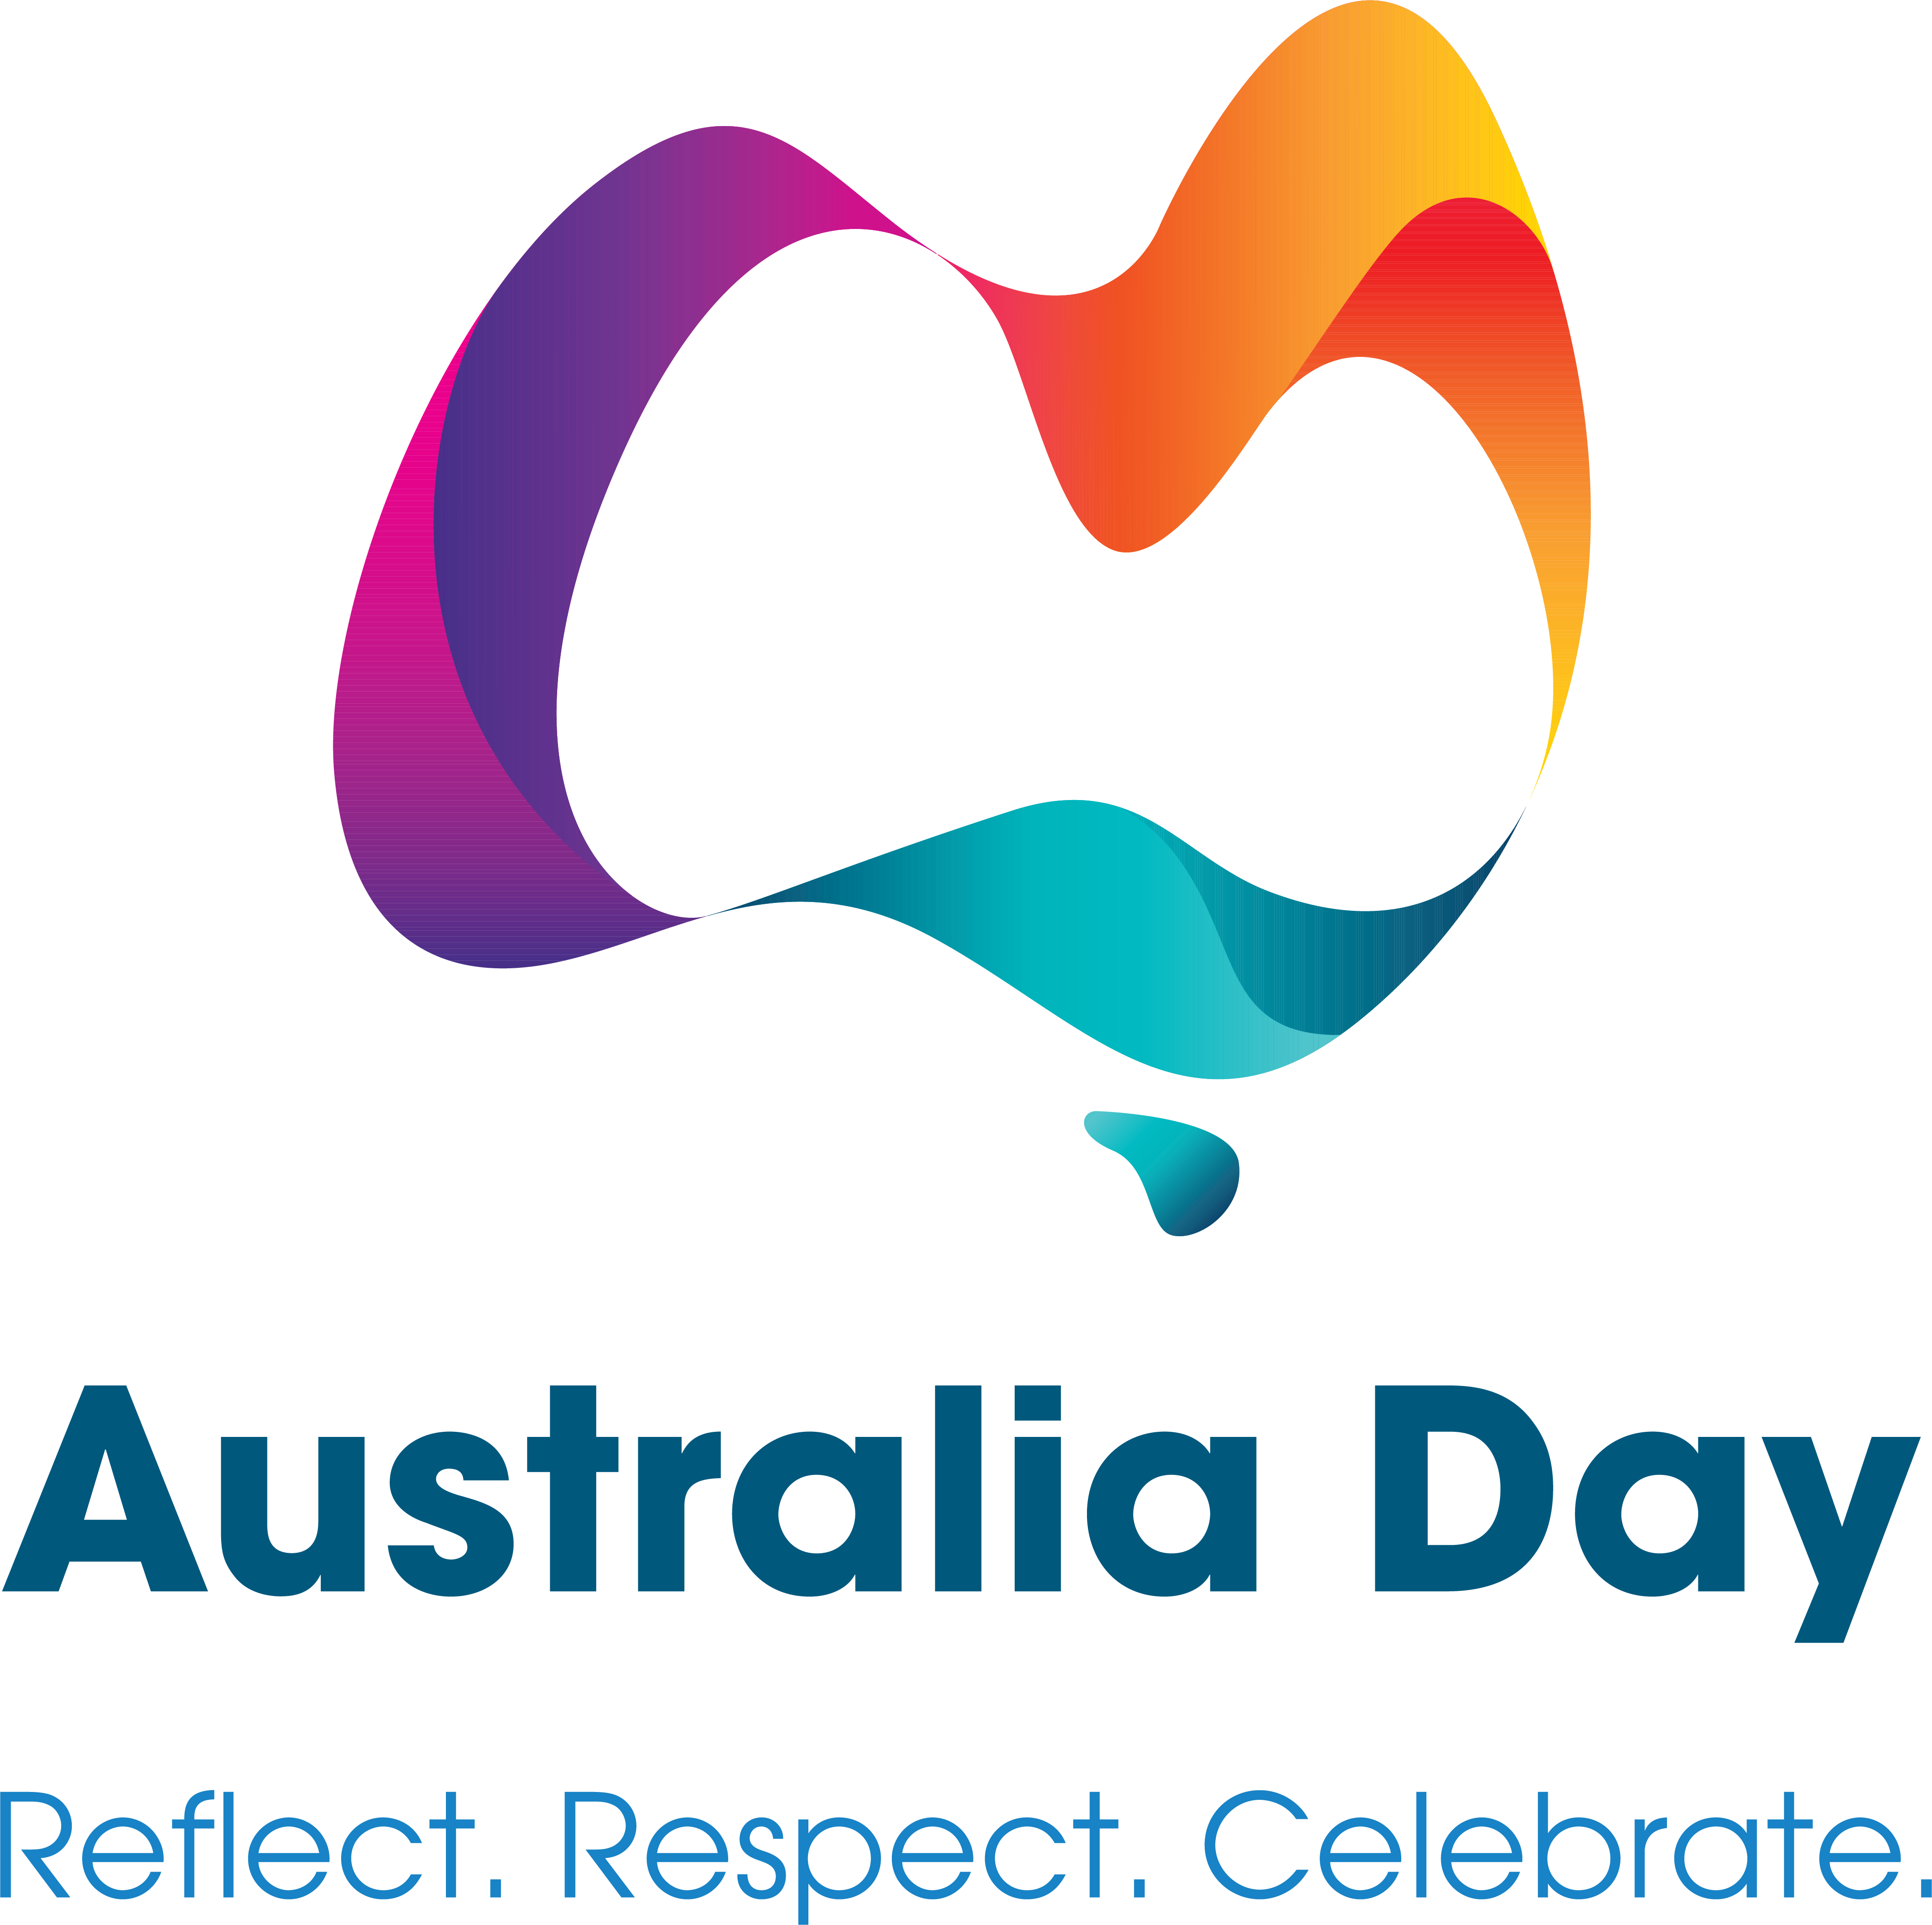 Australia National Day Council